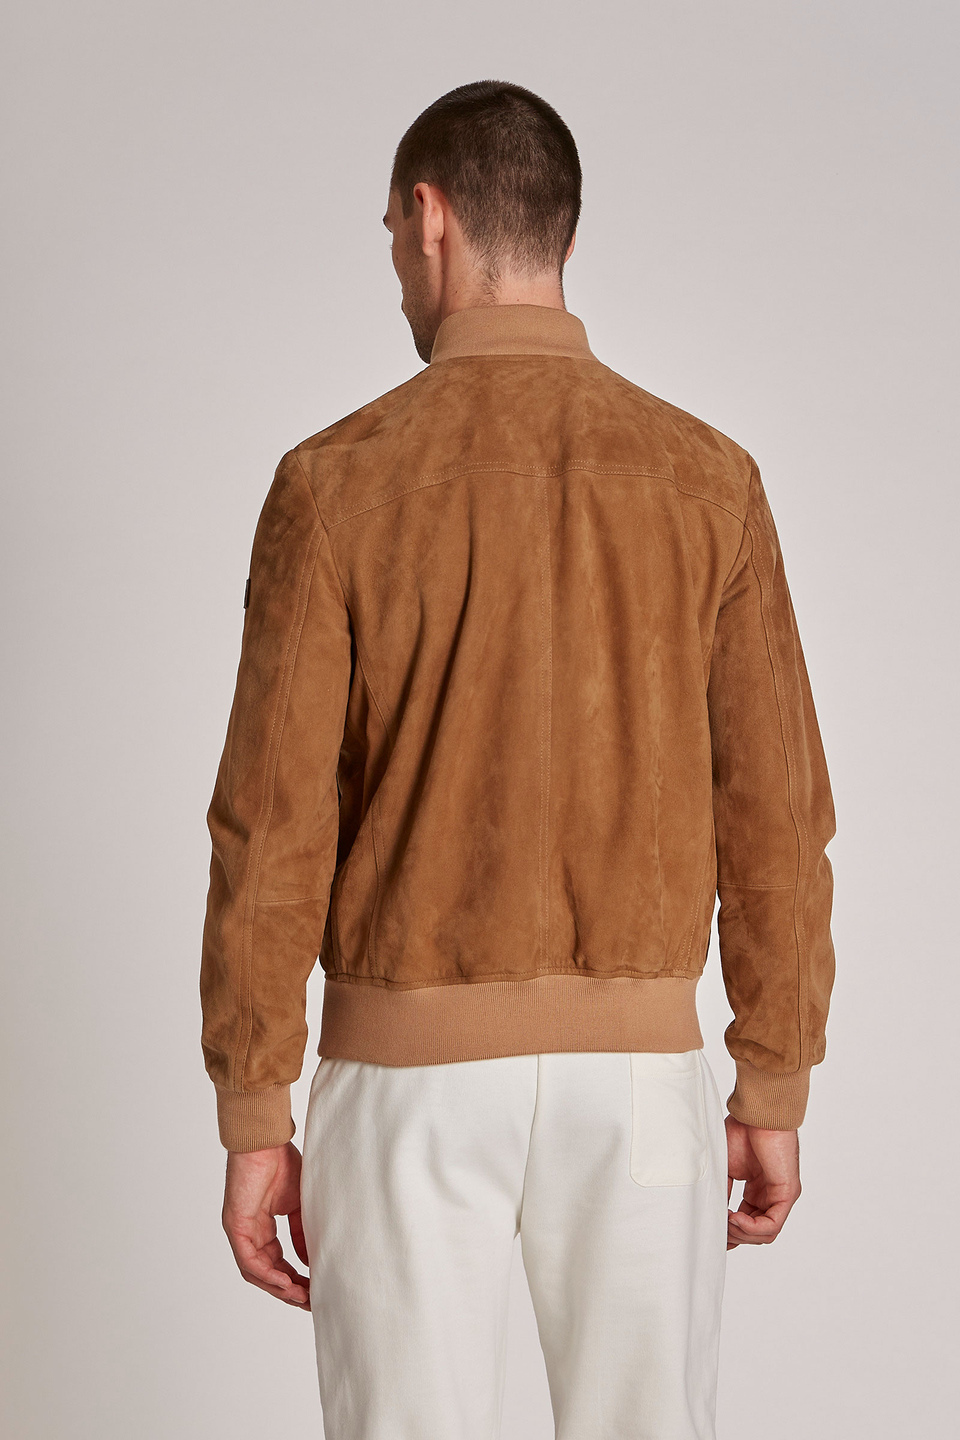 Men's button-up suede bomber jacket - La Martina - Official Online Shop